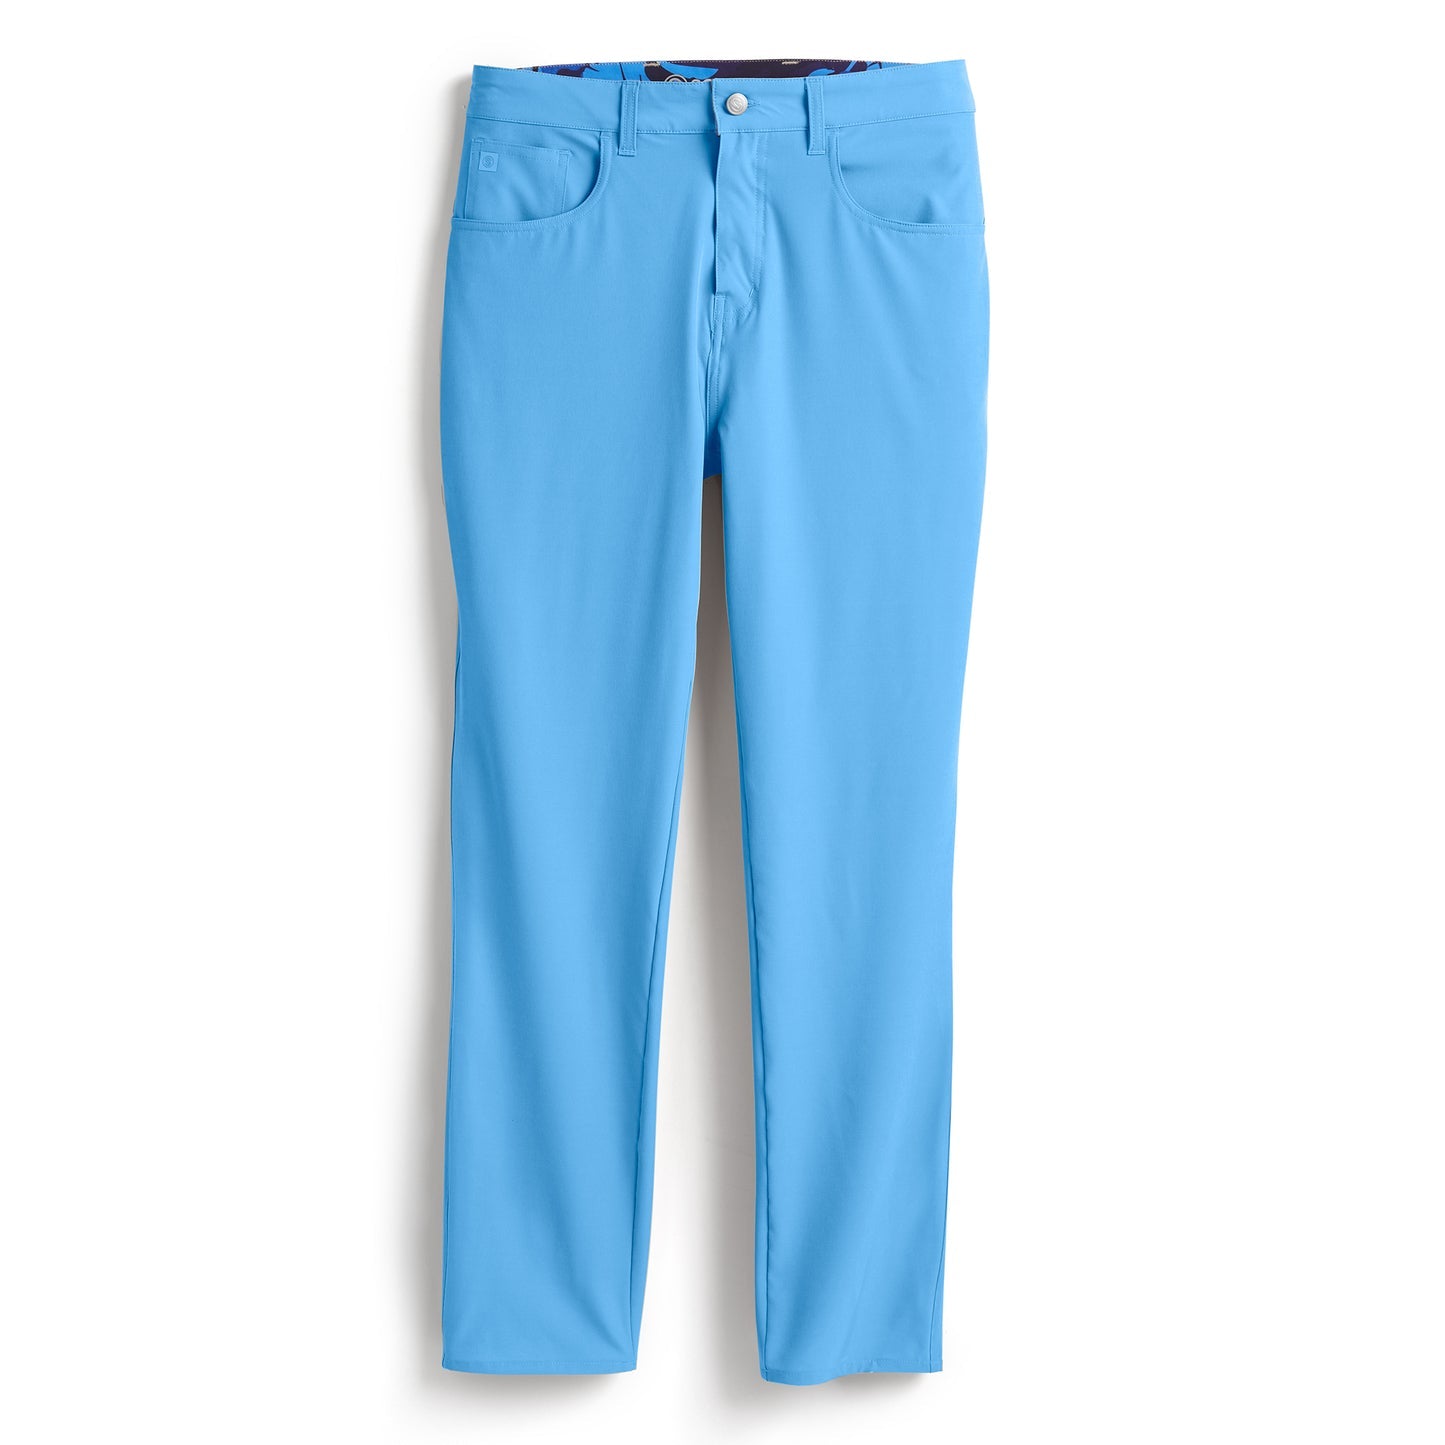 SCALES All Tides Pants - 5 Pockets (Core Blue Colors)